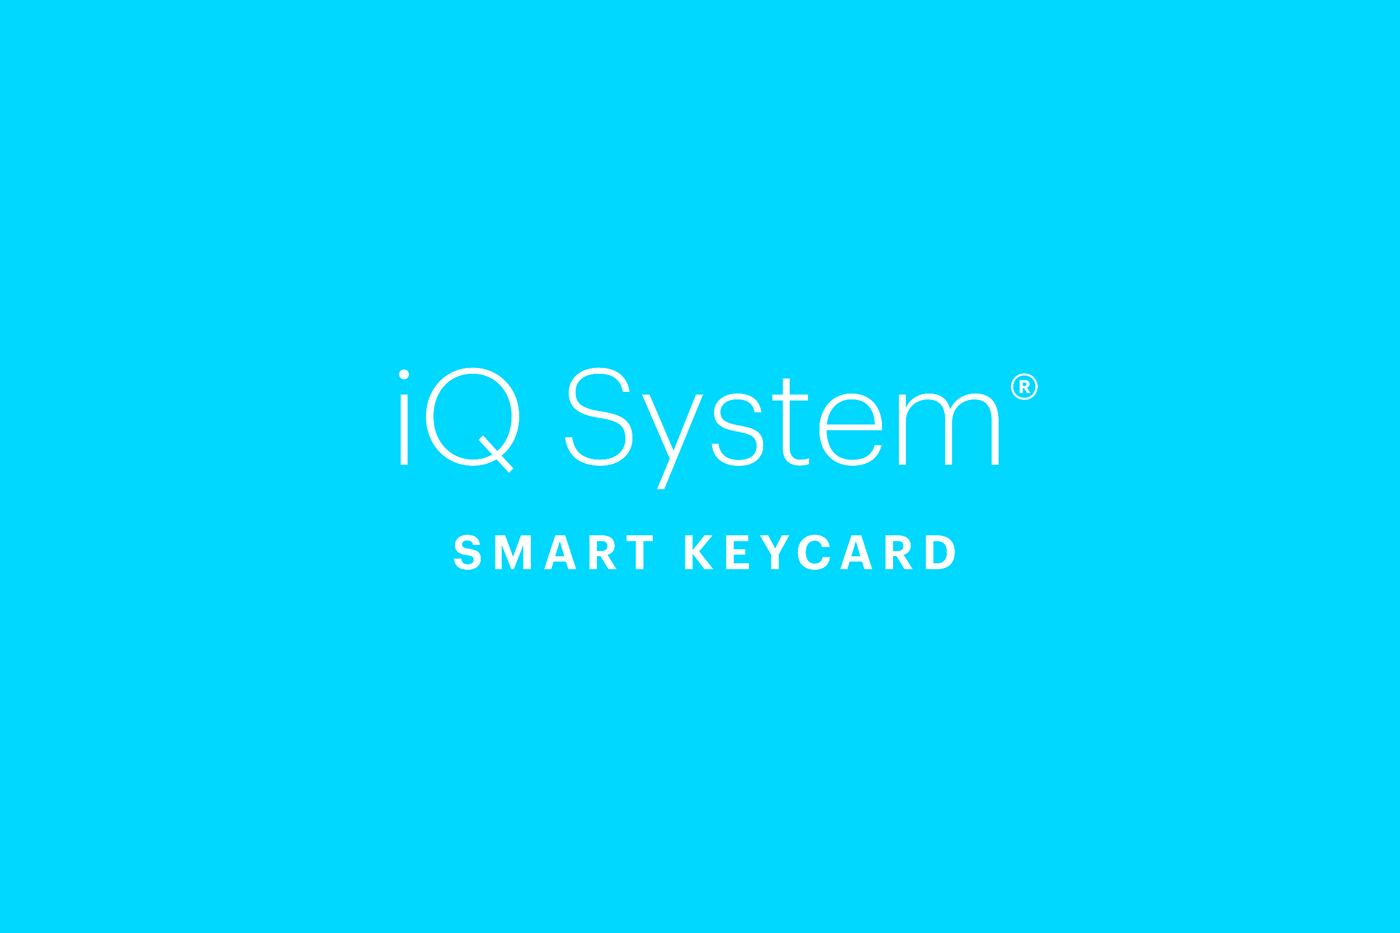 Gogoro key Keycard NFCCARD Smart design graphicdesign NFC